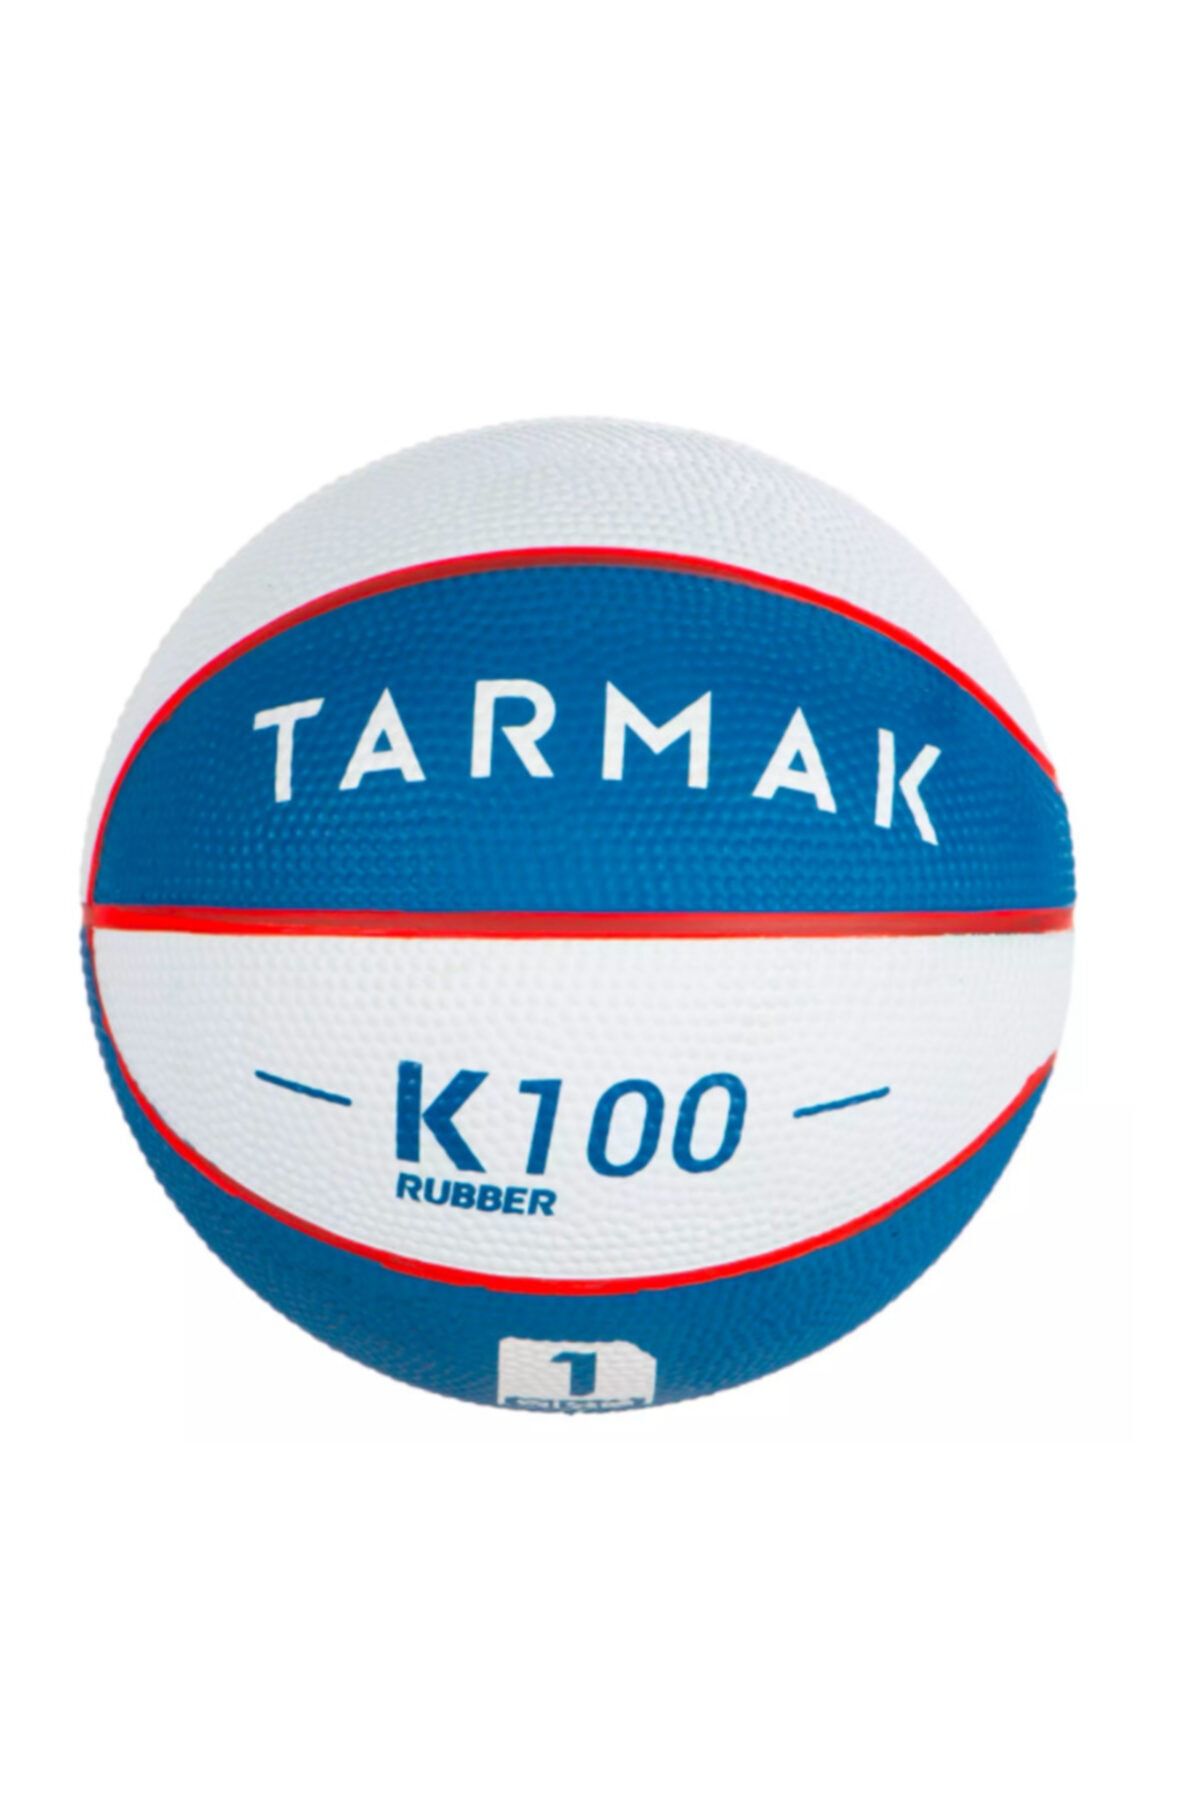 Tarmak - Mini Basketbol Topu 1 Numara Beyaz Mavi K100